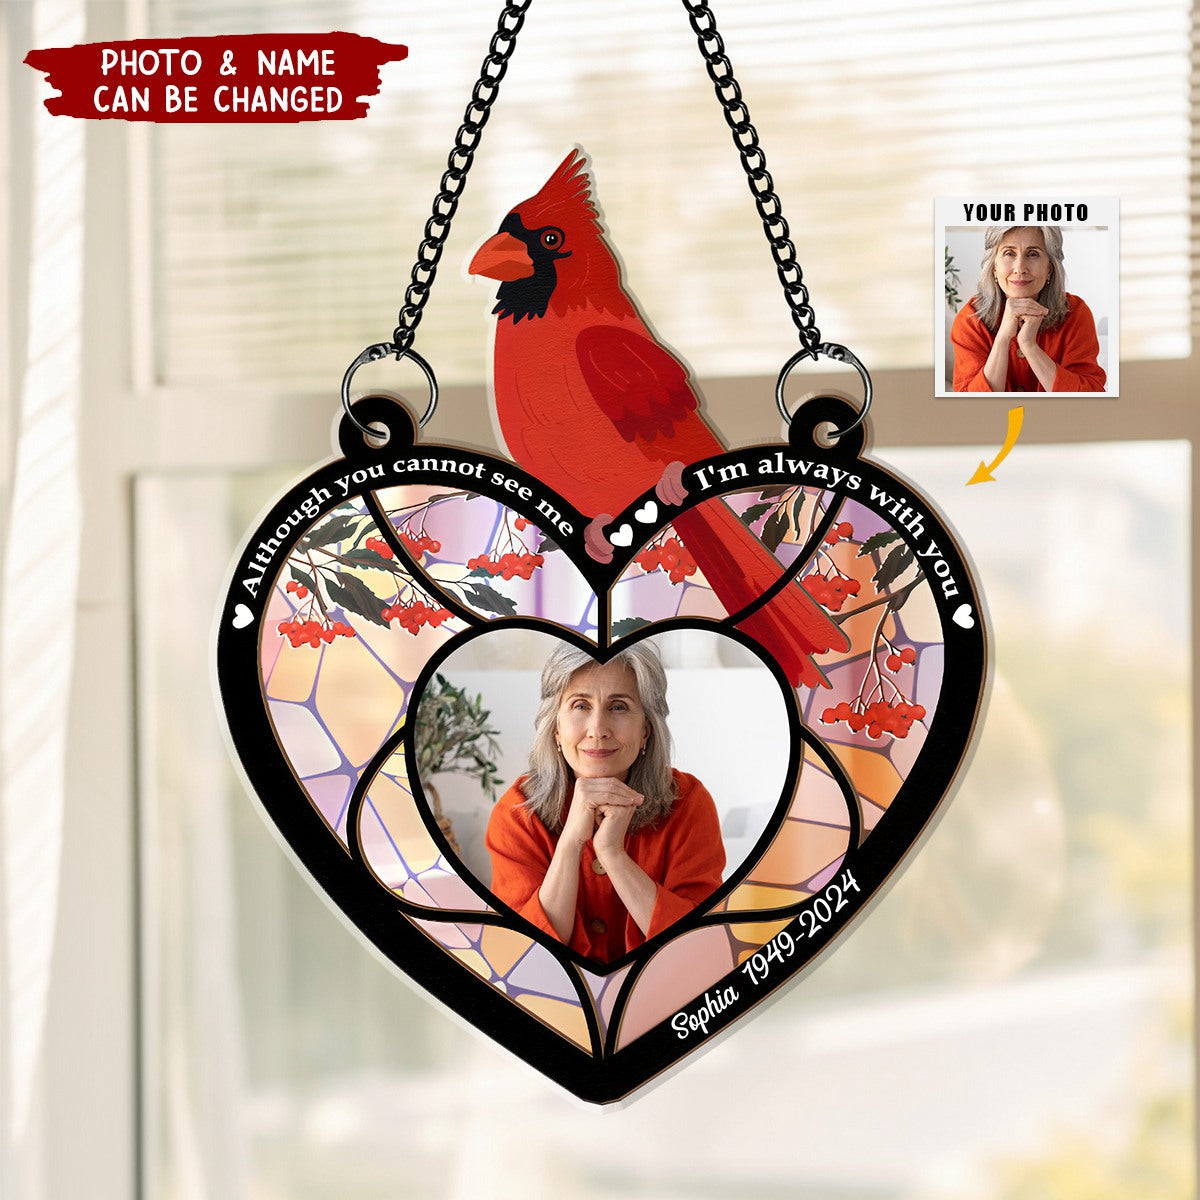 I'm Always With You - Personalized Cardinal Suncatcher Photo Ornament